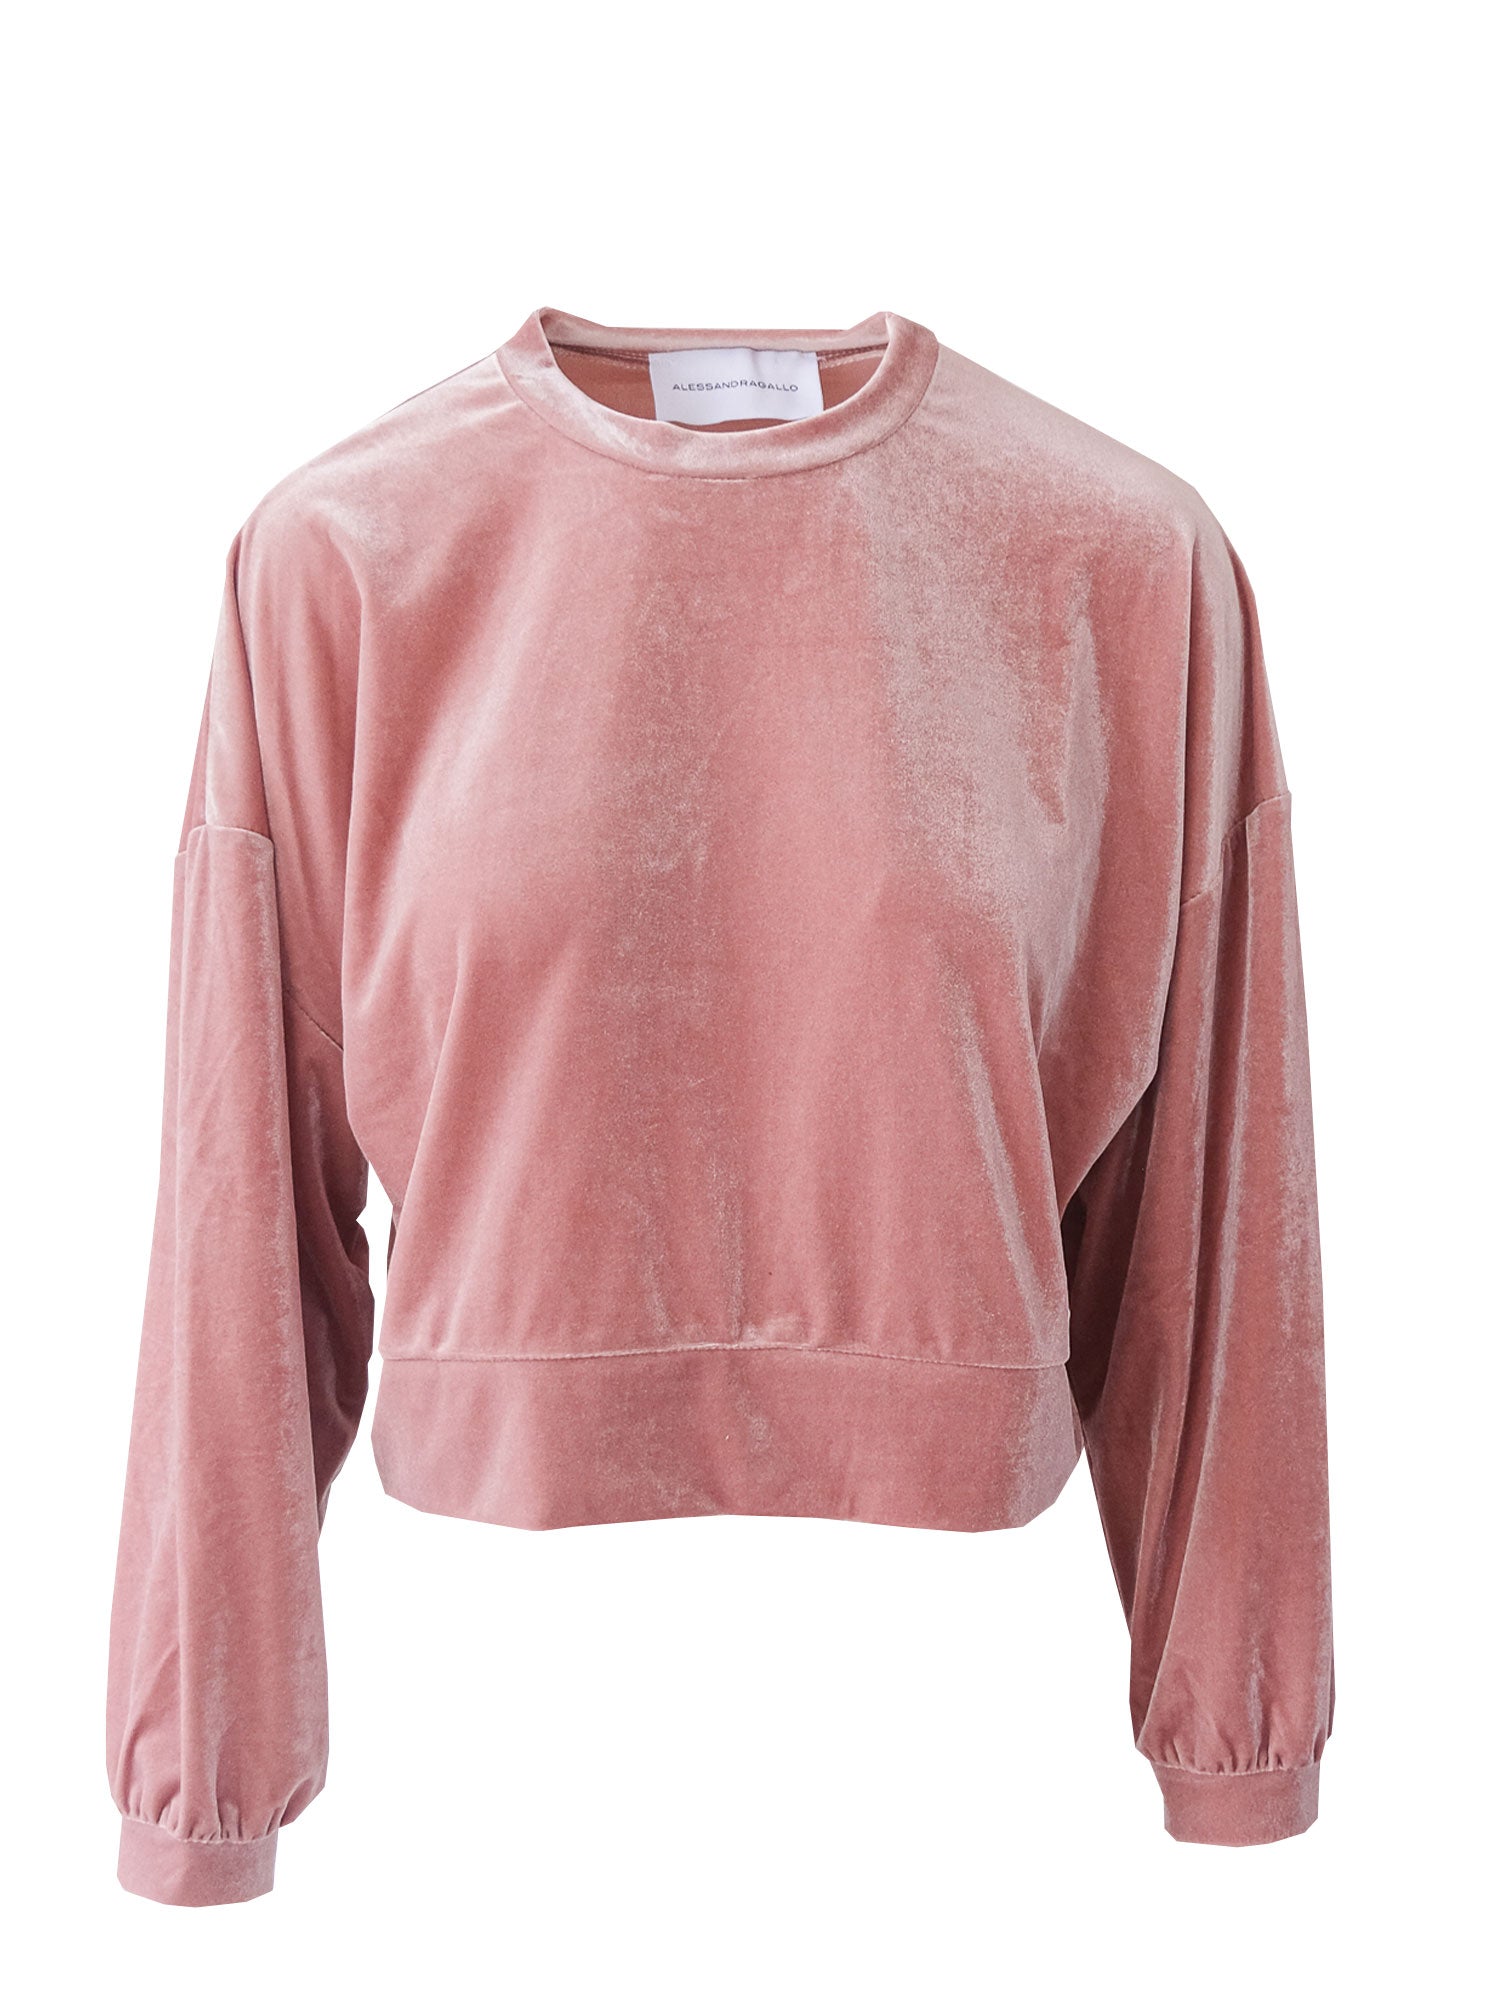 IOLE - pink chenille sweatshirt